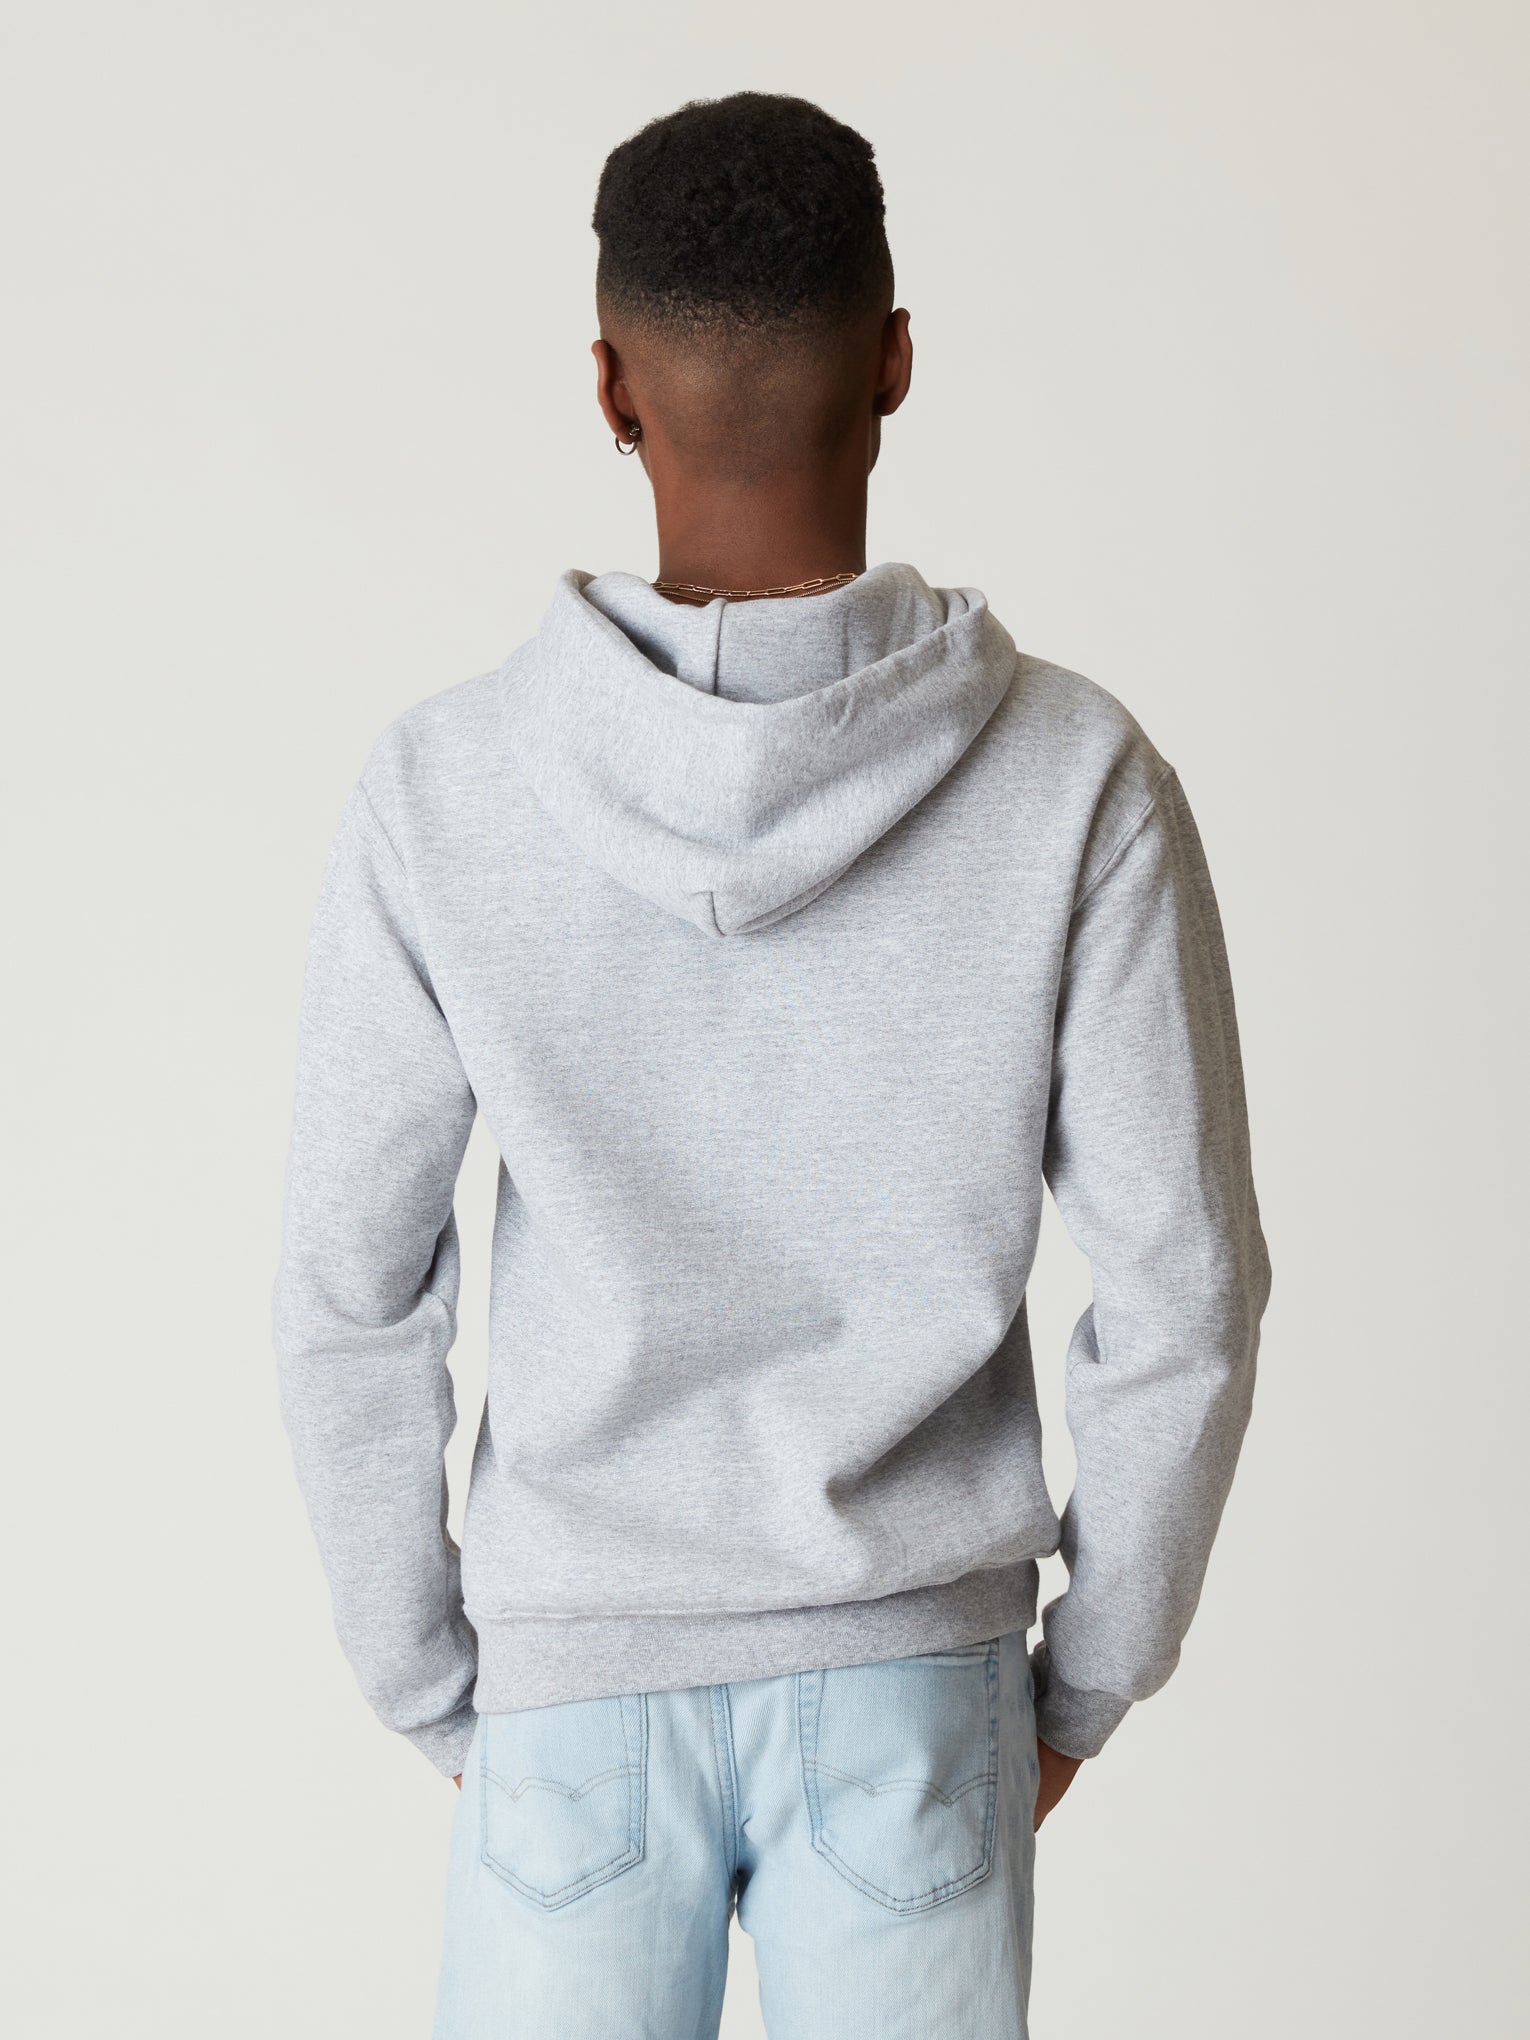 Shop Sweatshirt – MIT Harvard The Hooded